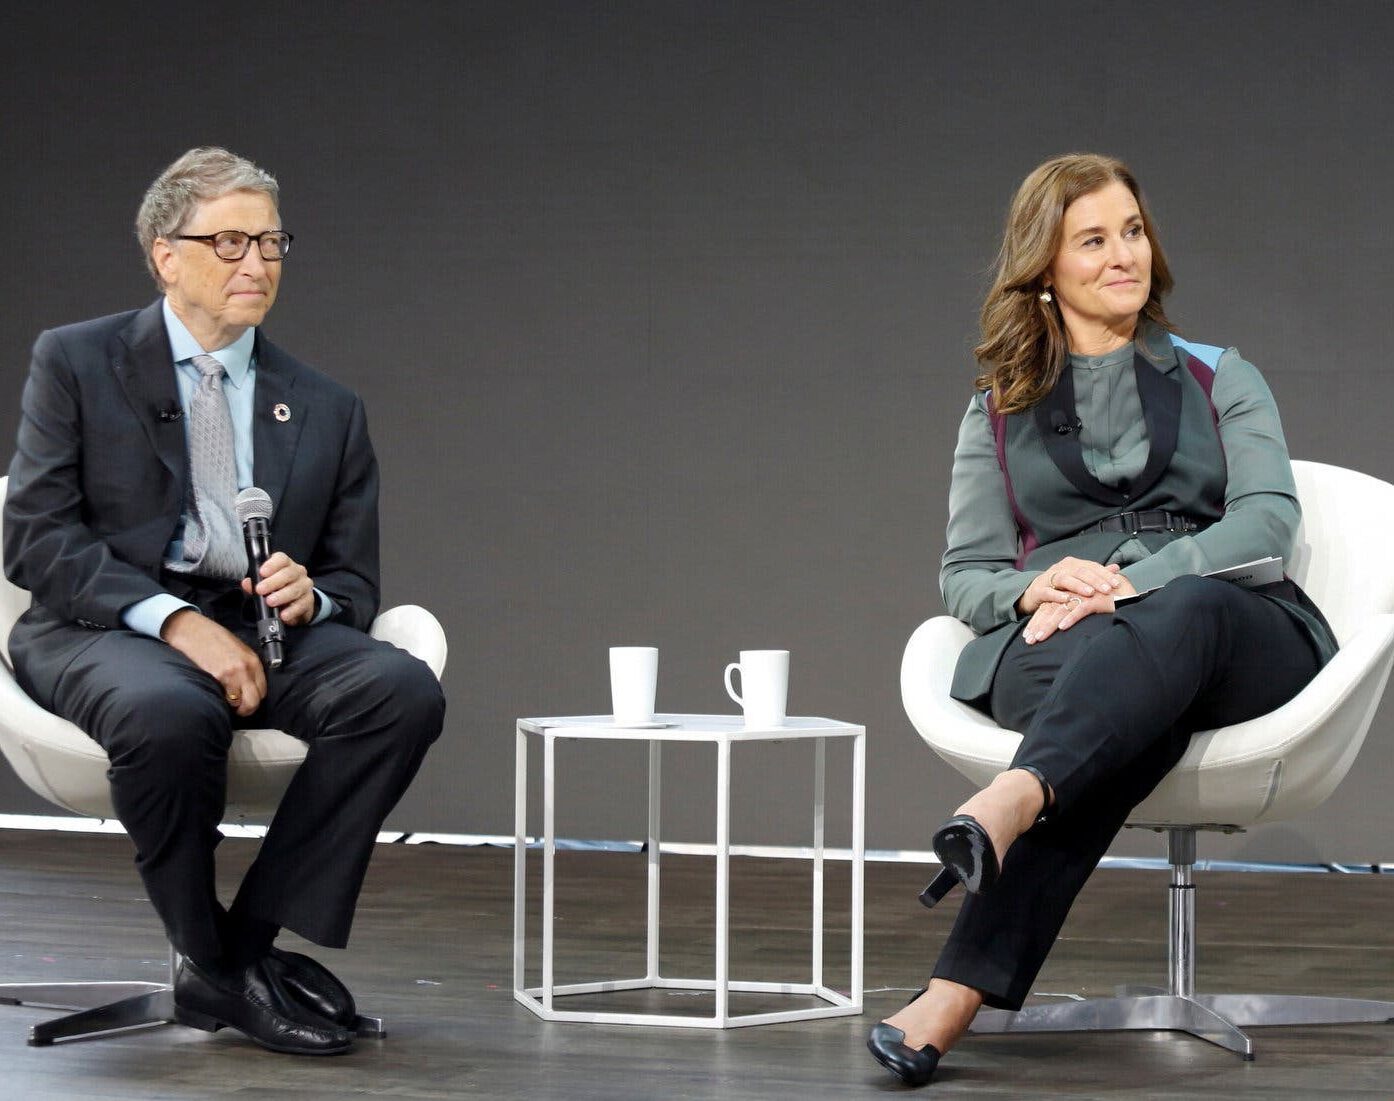 Bill Gates Wife: Who Is Melinda French Gates?